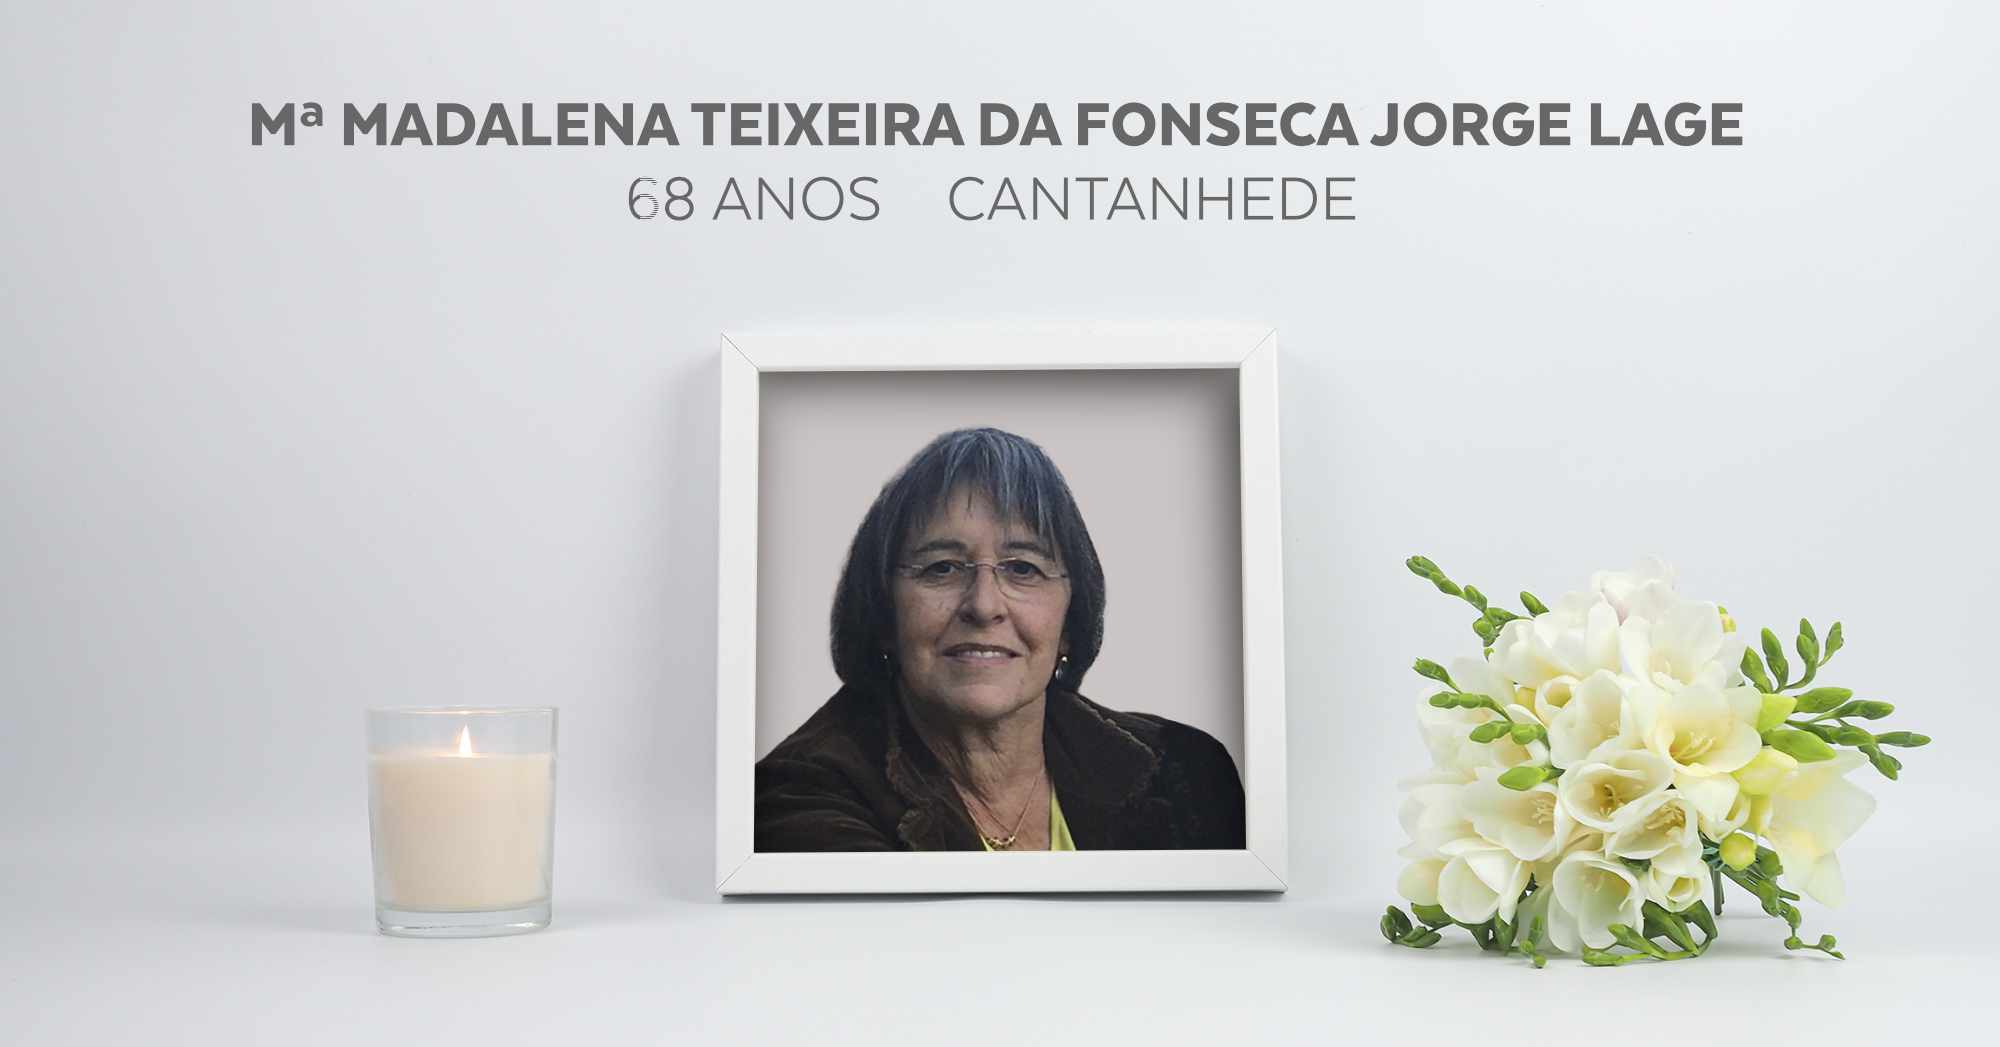 Mª Madalena Teixeira da Fonseca Jorge Lage